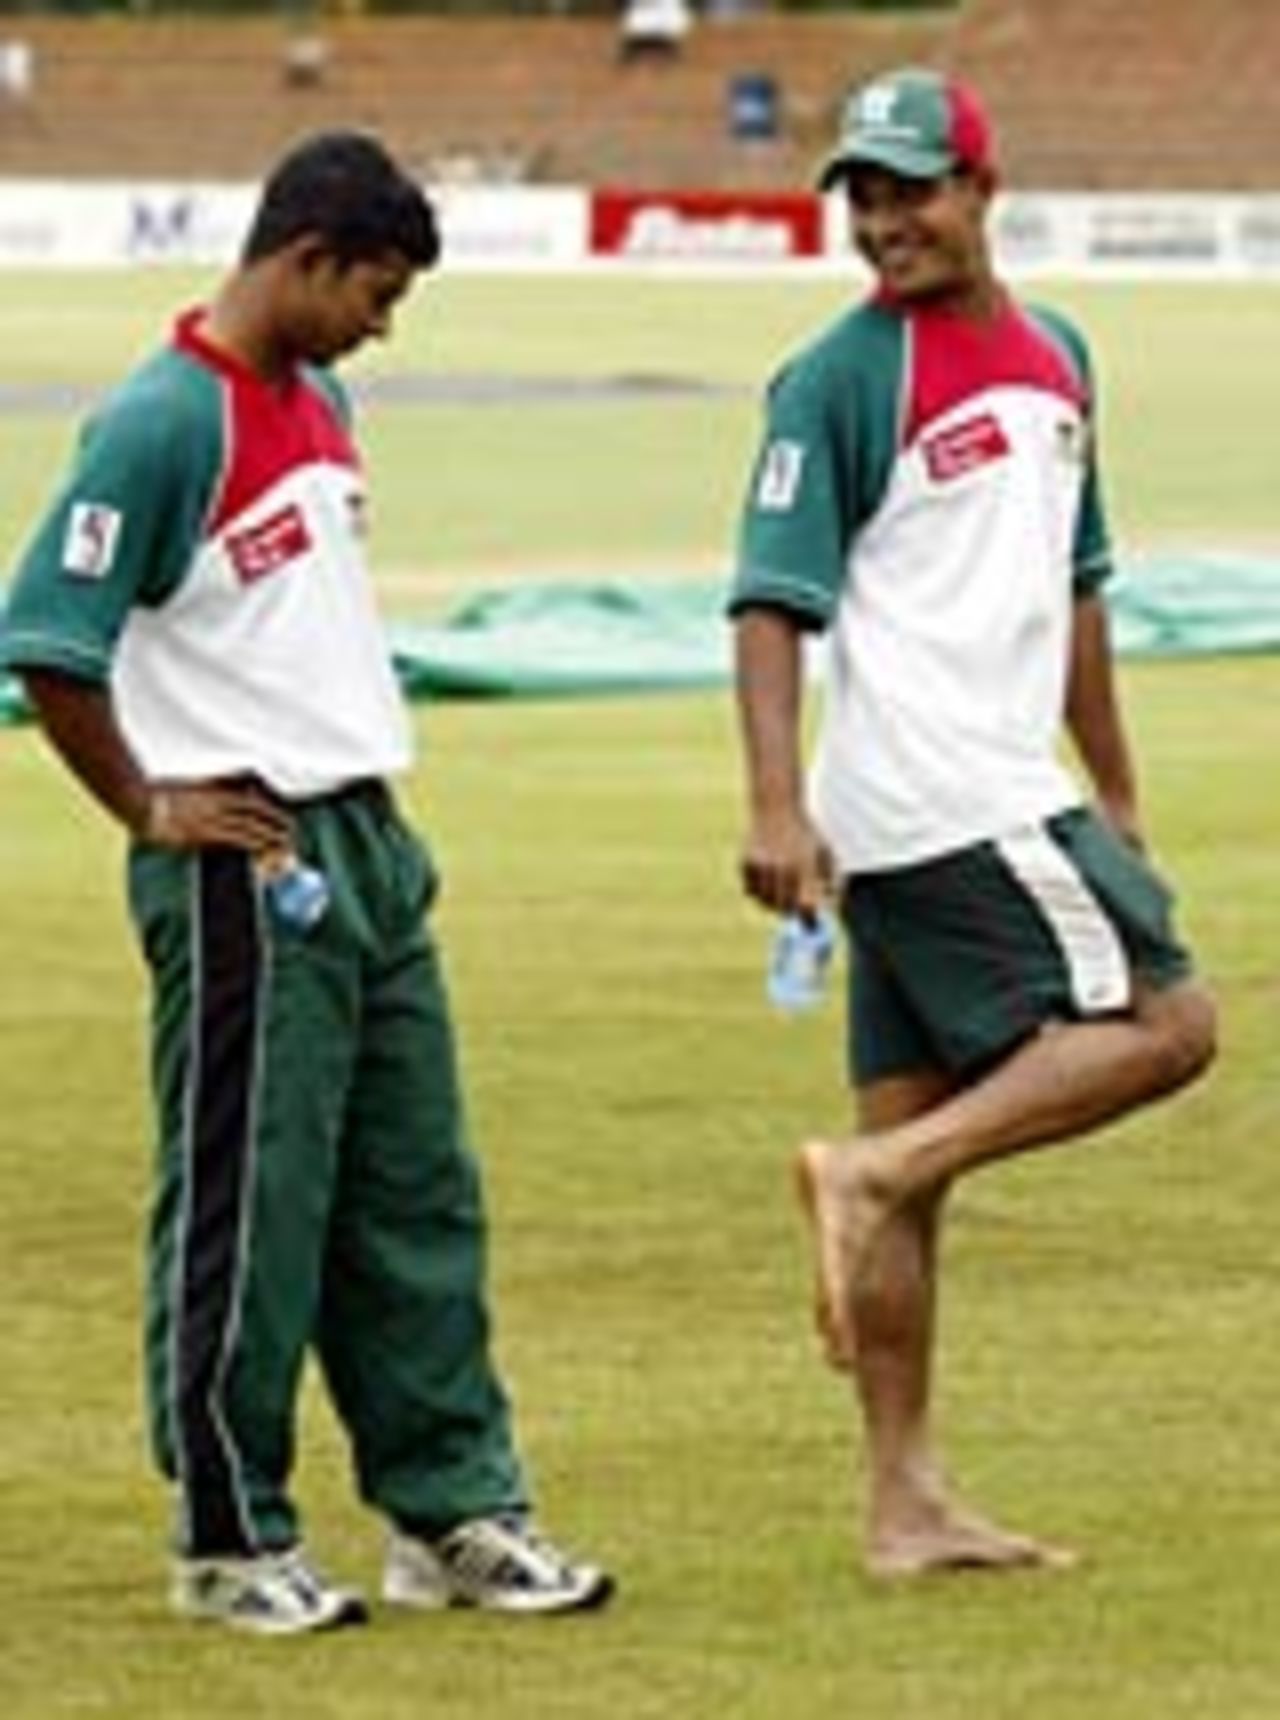 Hannan Sarker and Mushfiqur Rahman inspect the outfield at Bulawayo, Zimbabwe v Bangladesh, 2nd Test, February 27, 2004